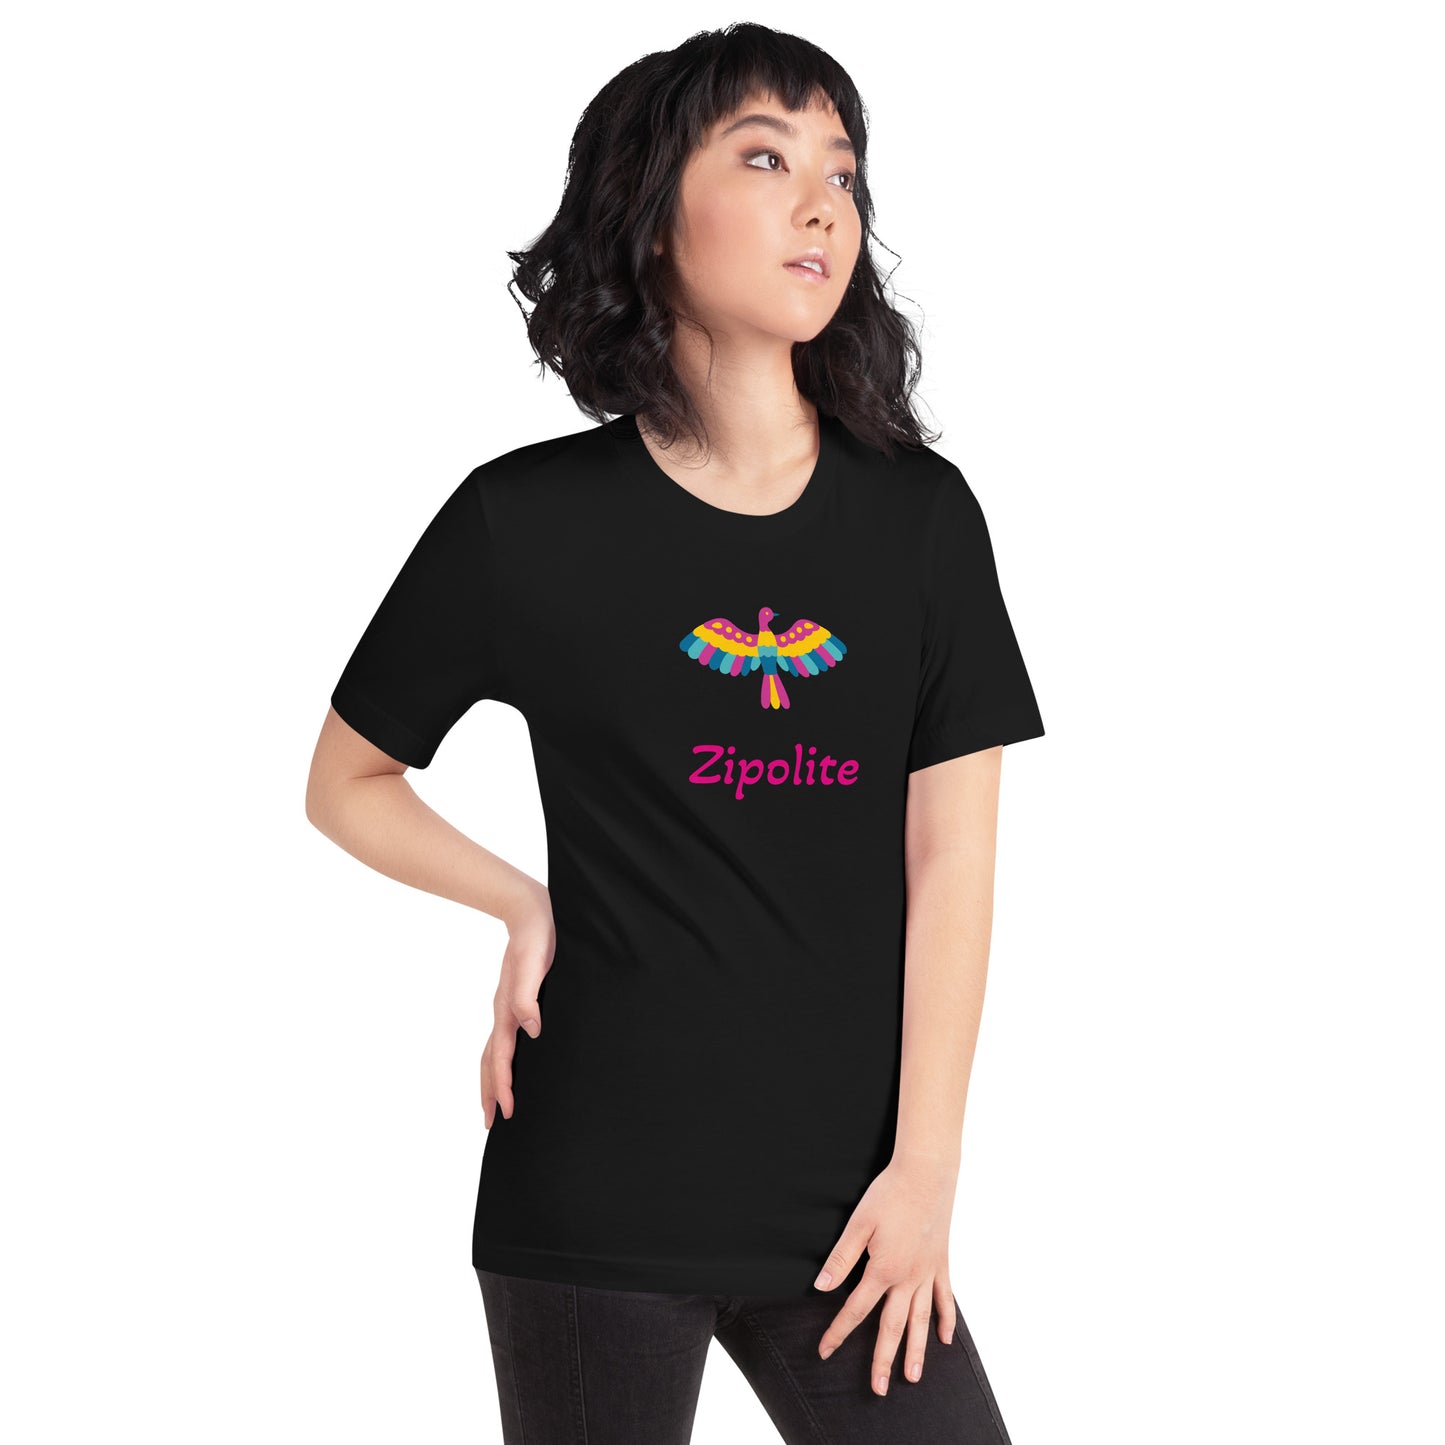 Zipolite unisex t-shirt